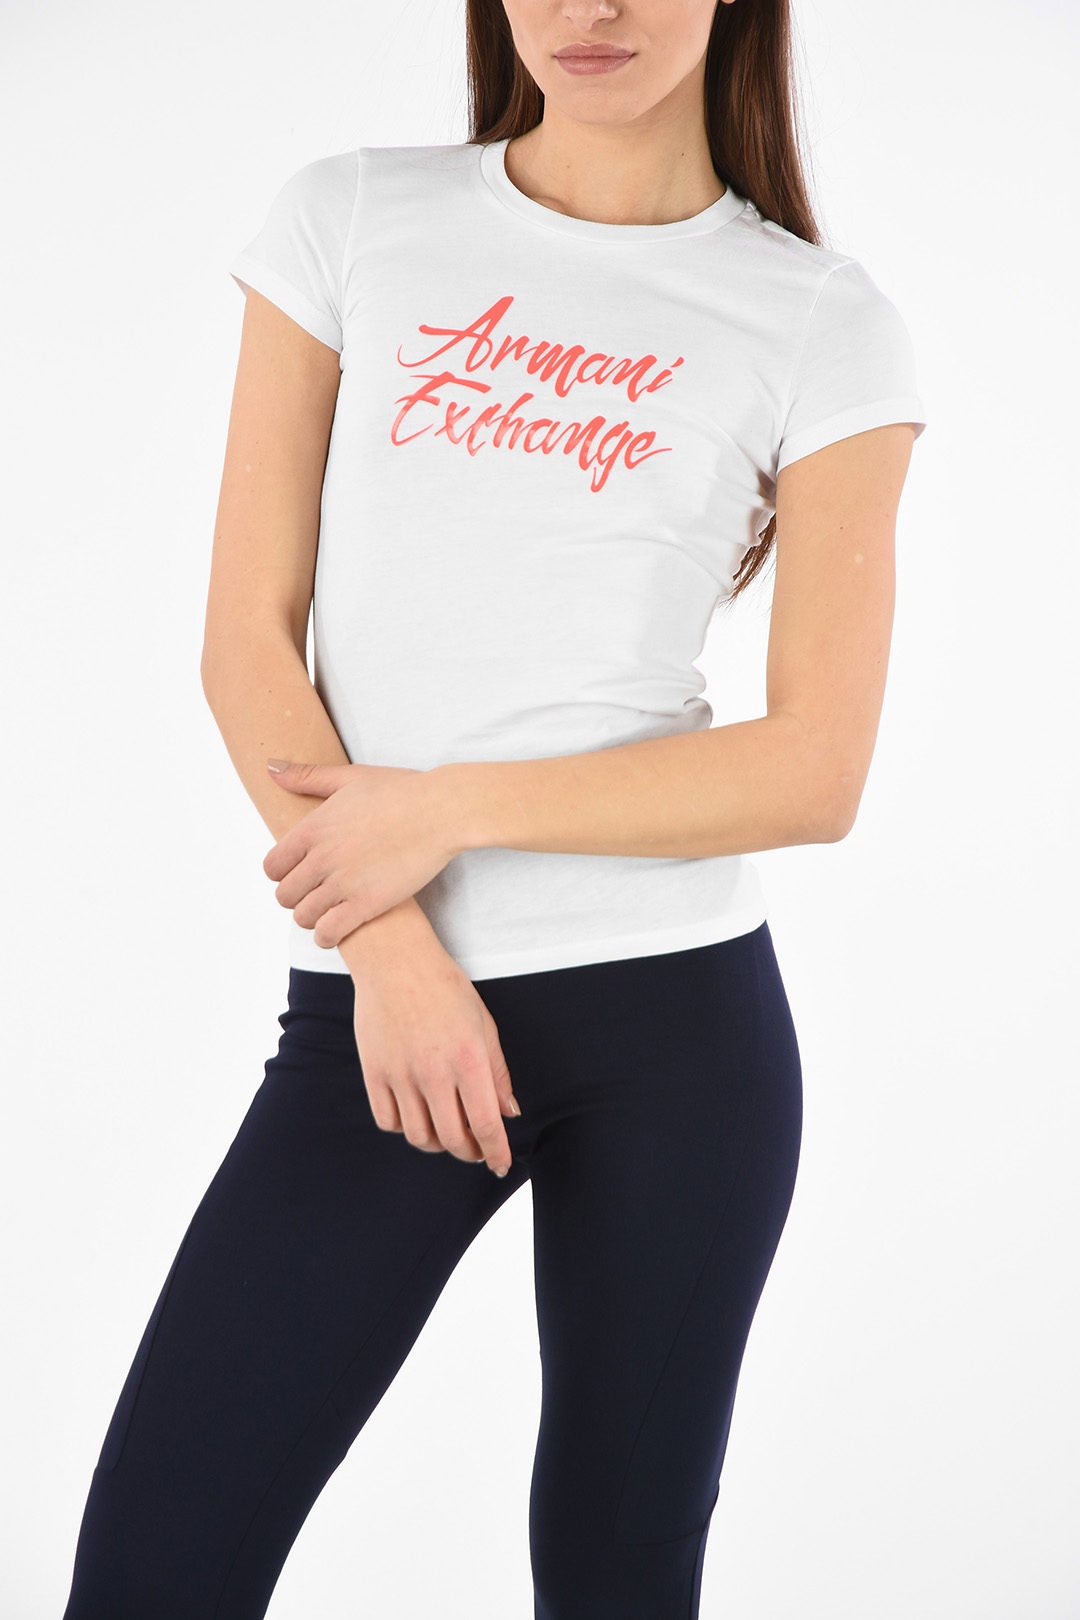 Arriba 81+ imagen armani shirts for ladies - Abzlocal.mx